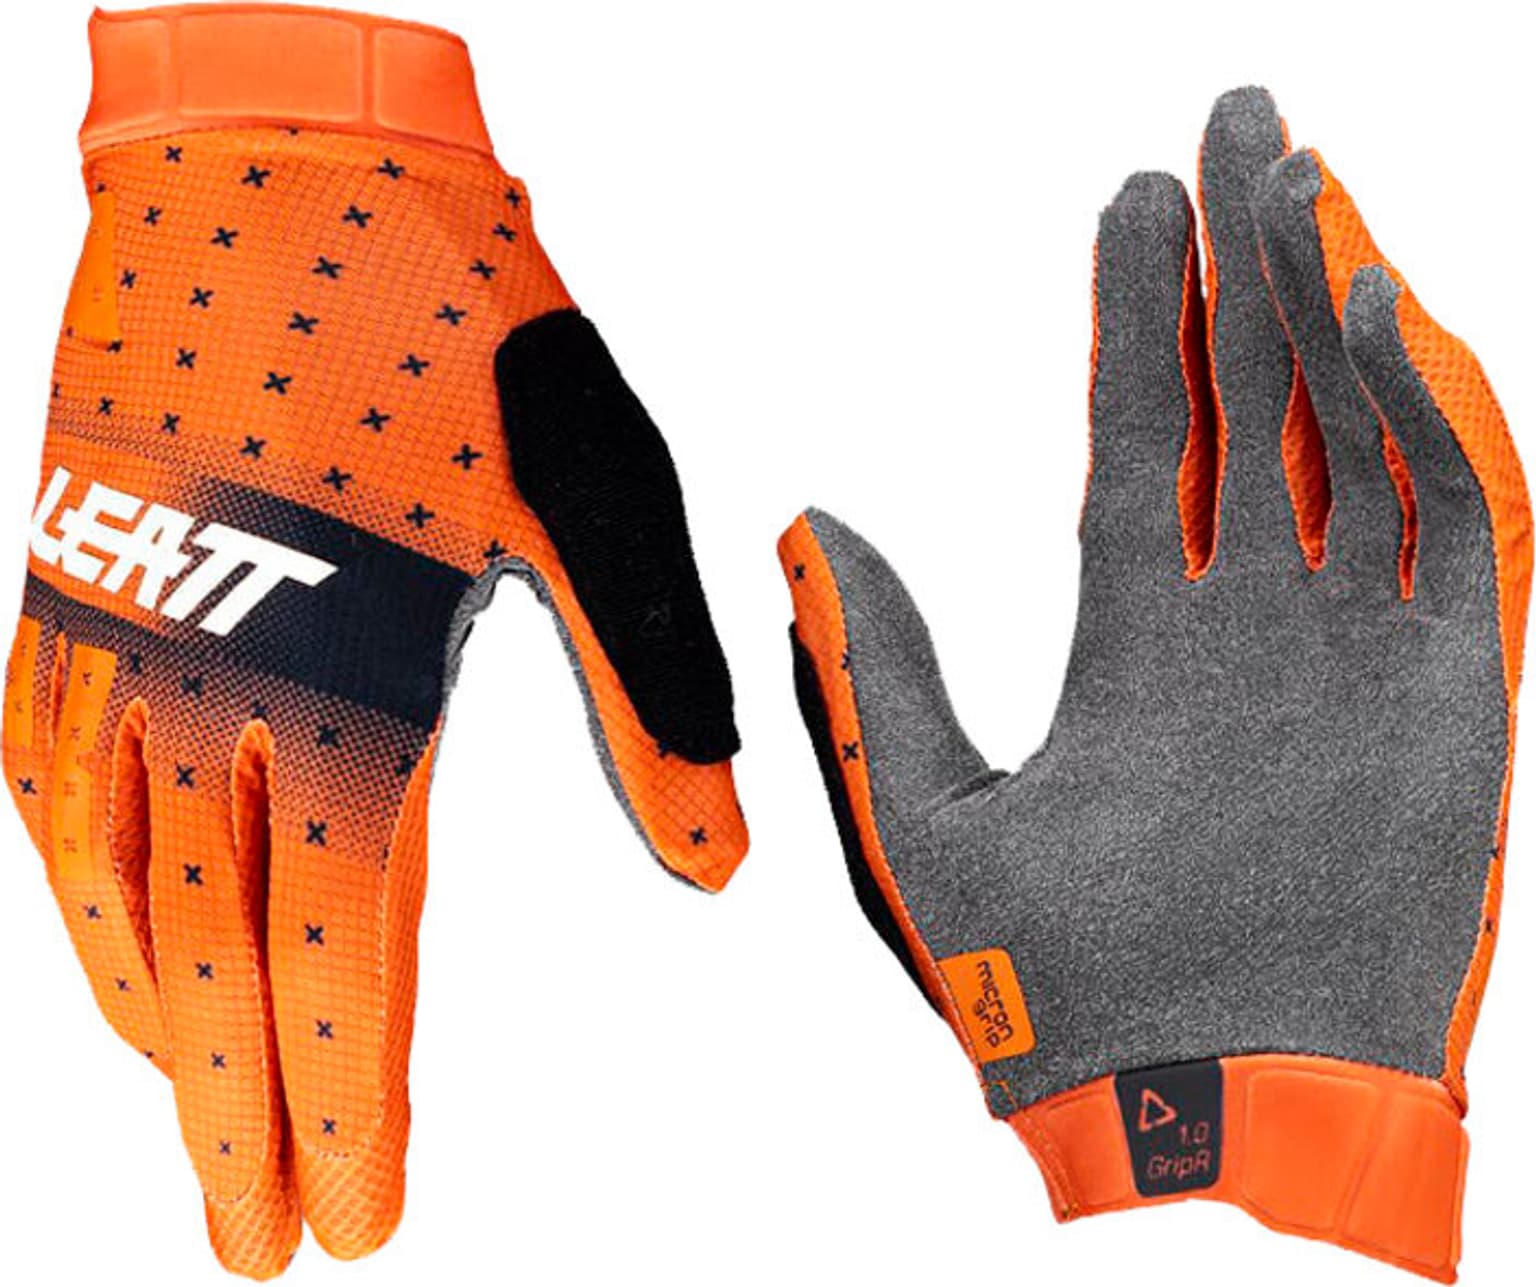 Leatt Leatt MTB Glove 1.0 GripR Guanti da bici arancio 2